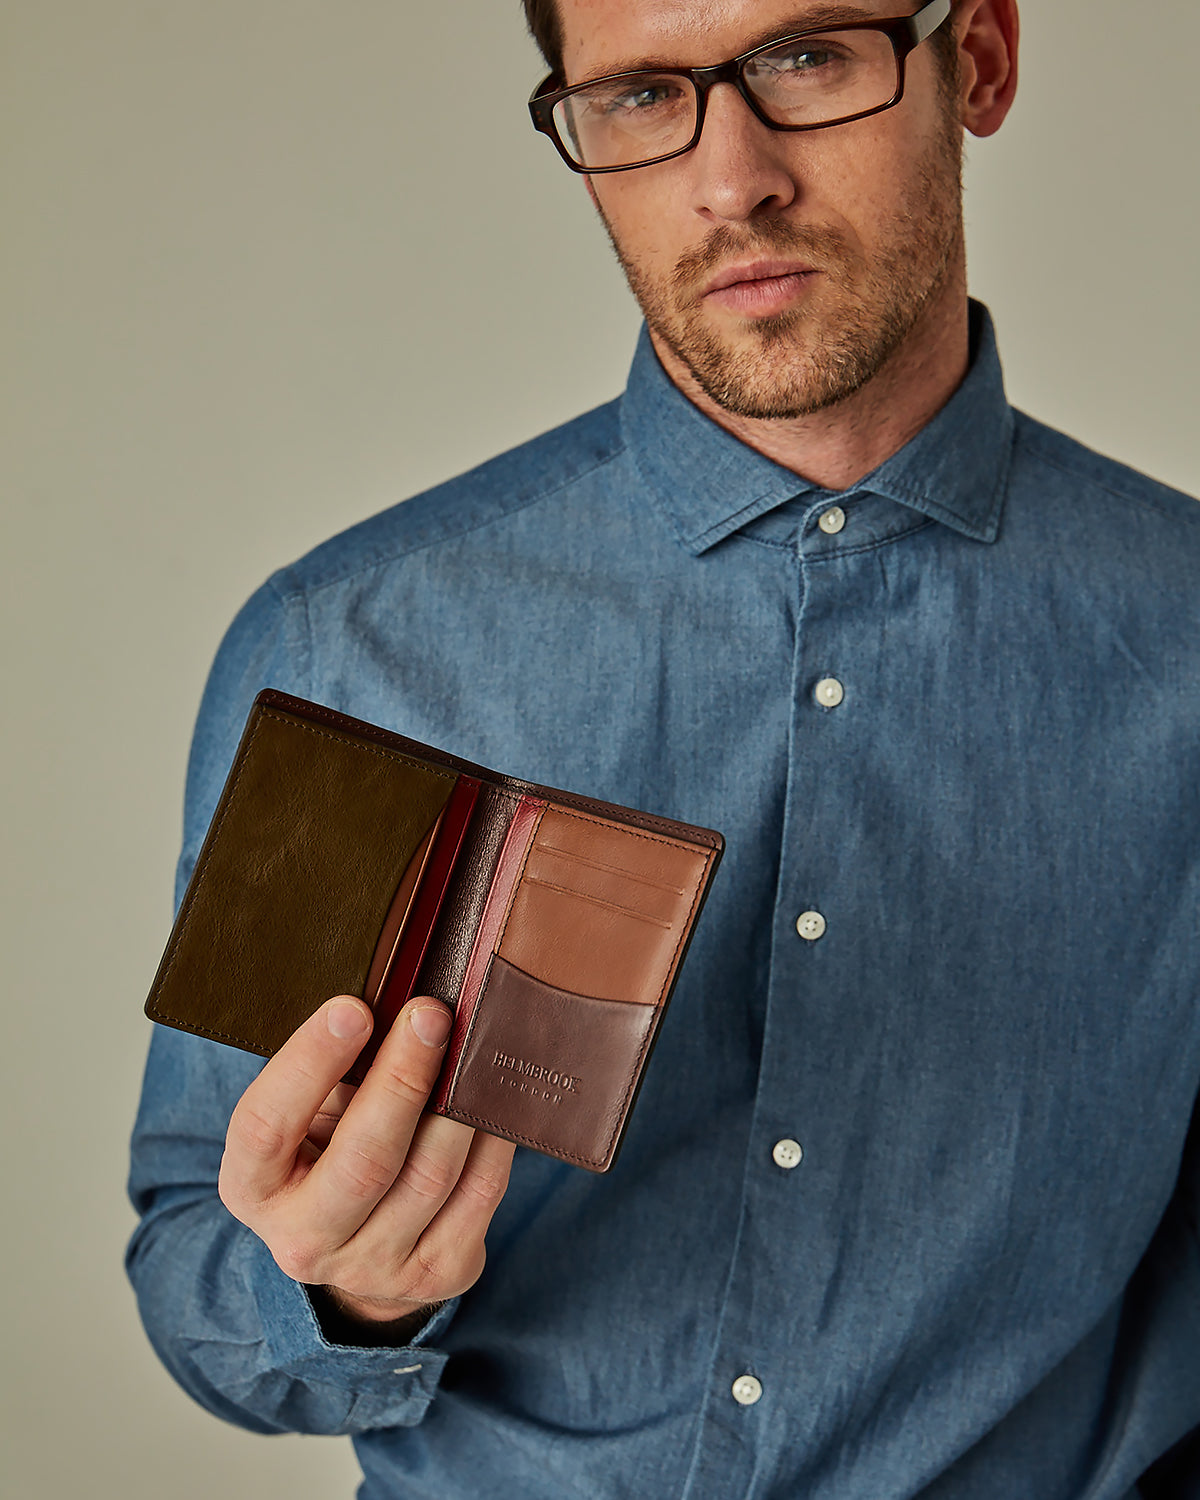 Bluemount Men Genuine Leather Slim Wallet Bifold Card Bill Slot